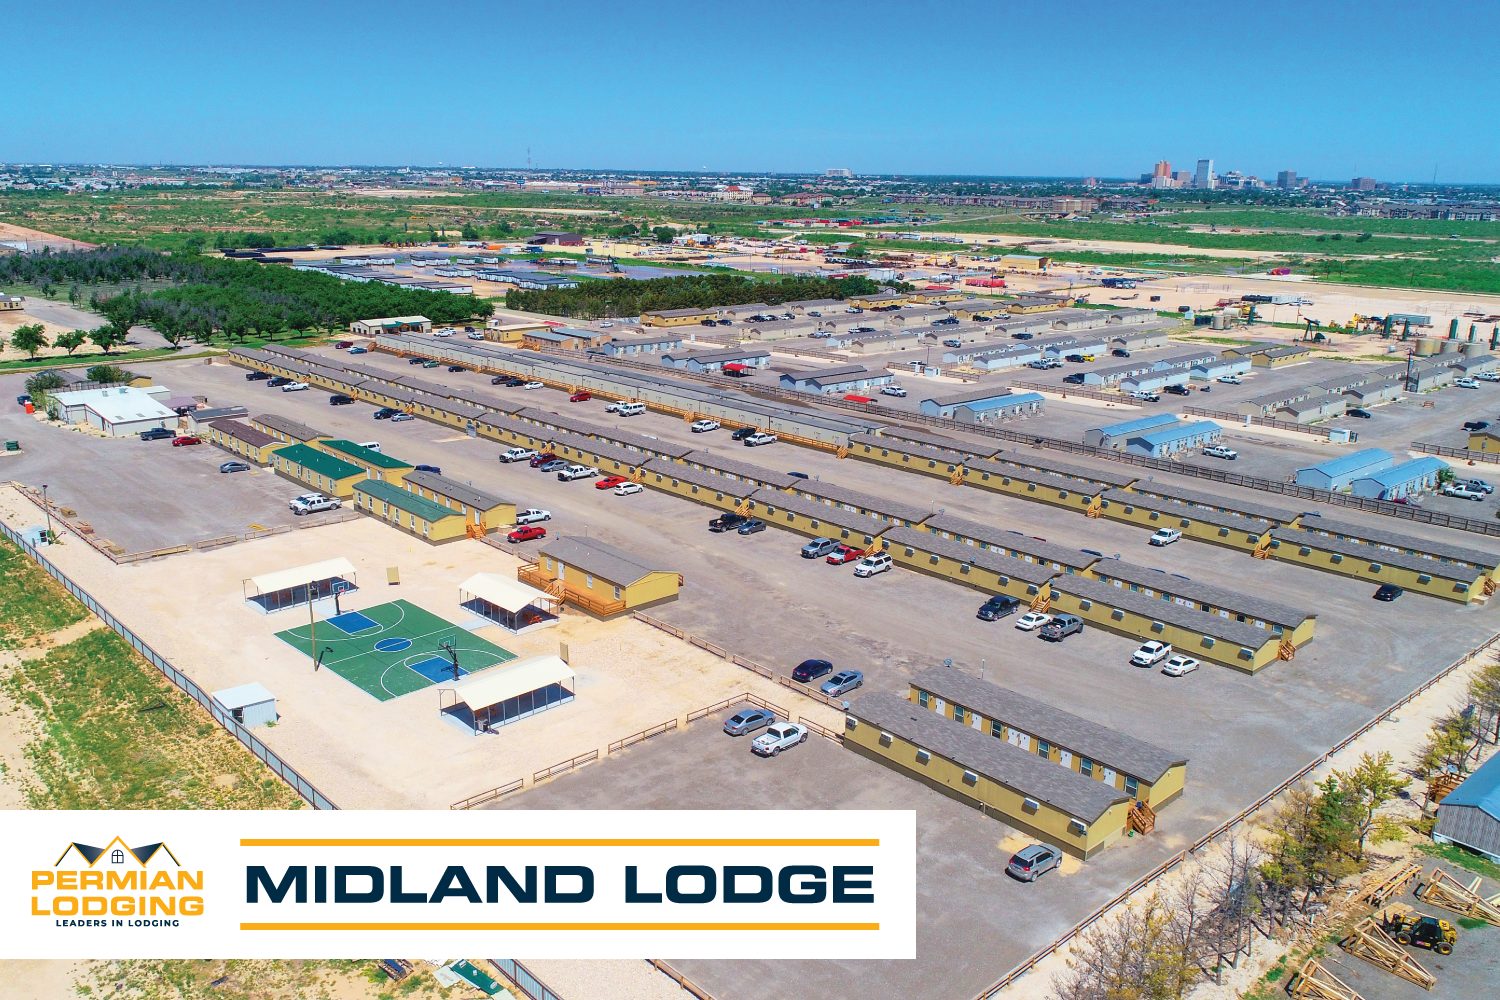 Midland Lodge